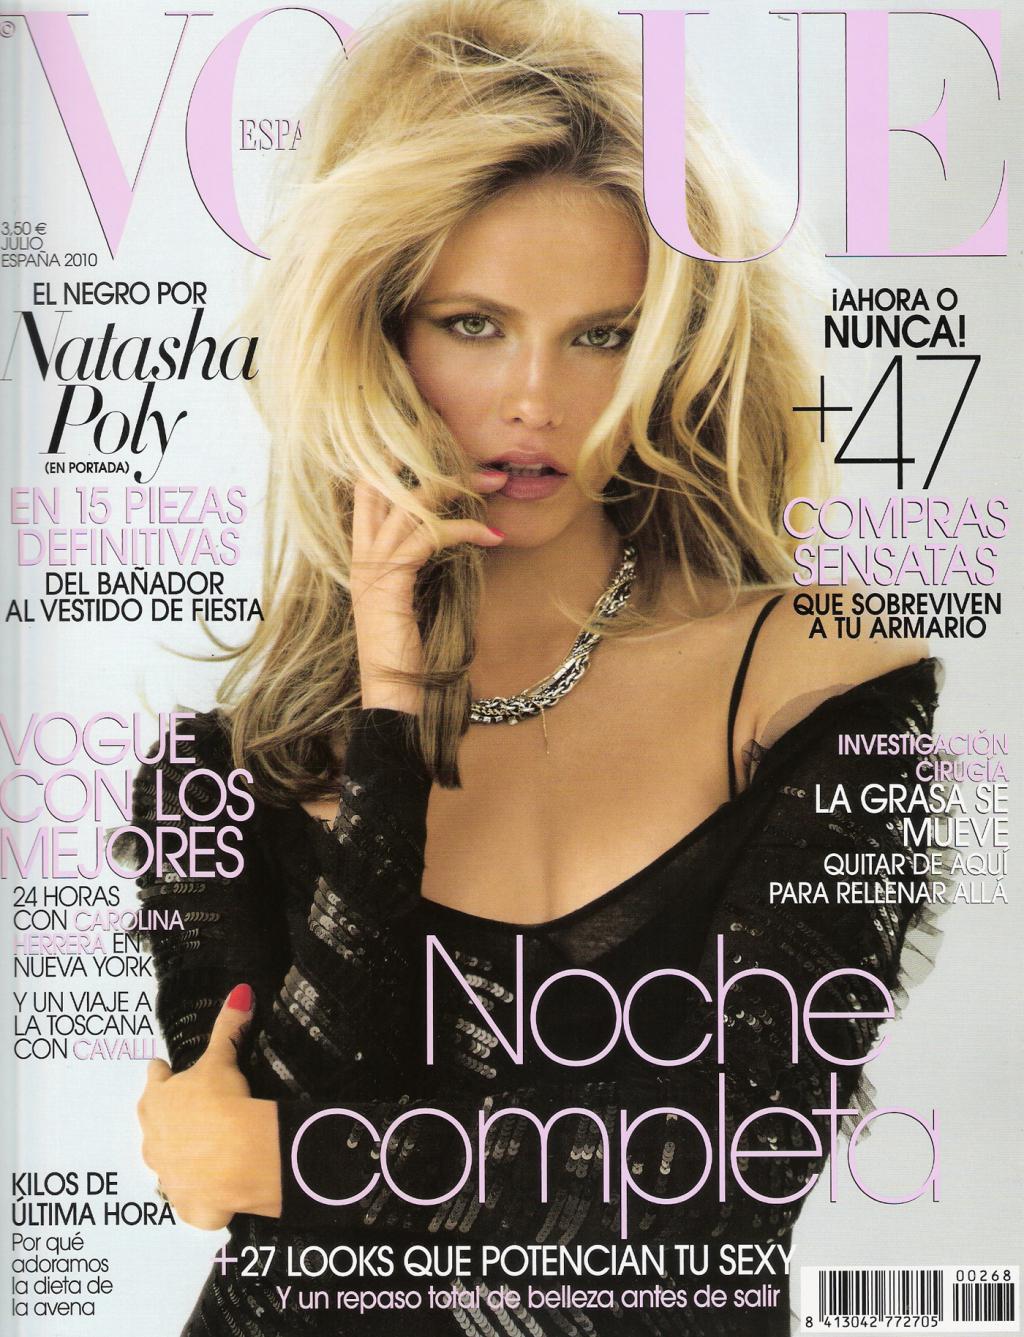 http://2.bp.blogspot.com/-gnVwAhKbOz0/TZl2kowEu8I/AAAAAAAAAdQ/XxjE4A92vAs/s1600/naaNatasha+Poly+Vogue+Spain.jpg